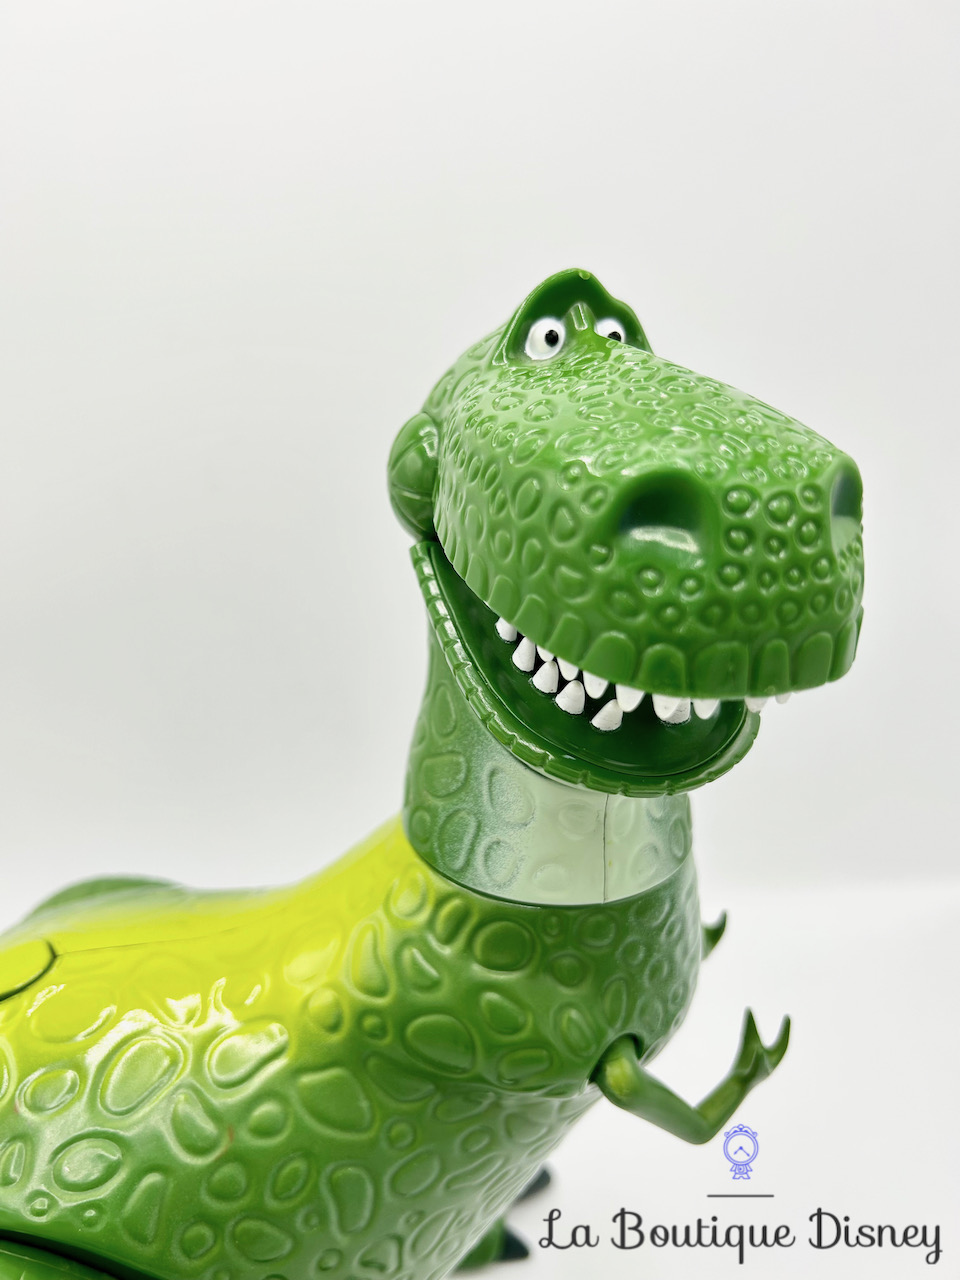 jouet-figurine-rex-parlant-sonore-disney-store-toy-story-dinosaure-vert-interactif-4